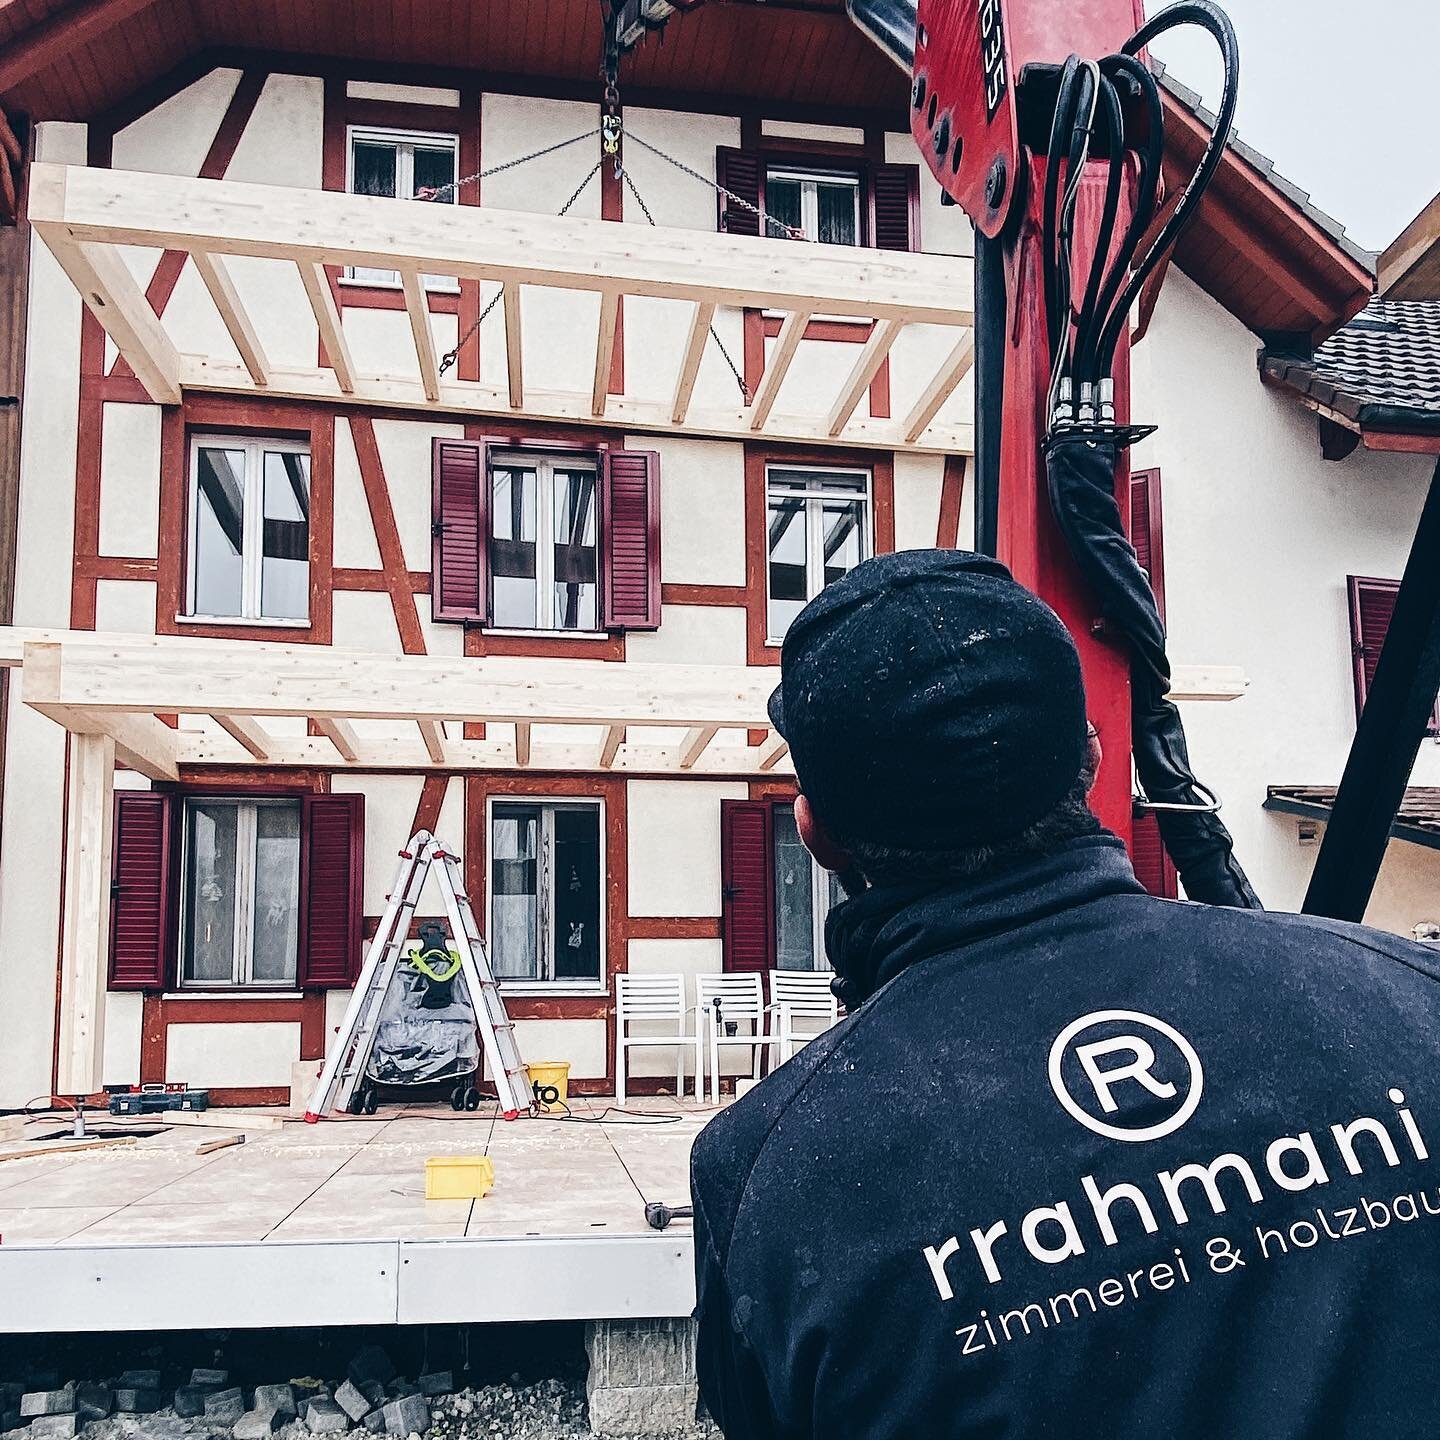 Anbau Balkone ⚒ 😎🤙🏻
.
.
.
.
.
#zimmermann #holzbau #holzmachtstolz #lovemyjob #holz #carpenter #handwerkskunst #craftmanship